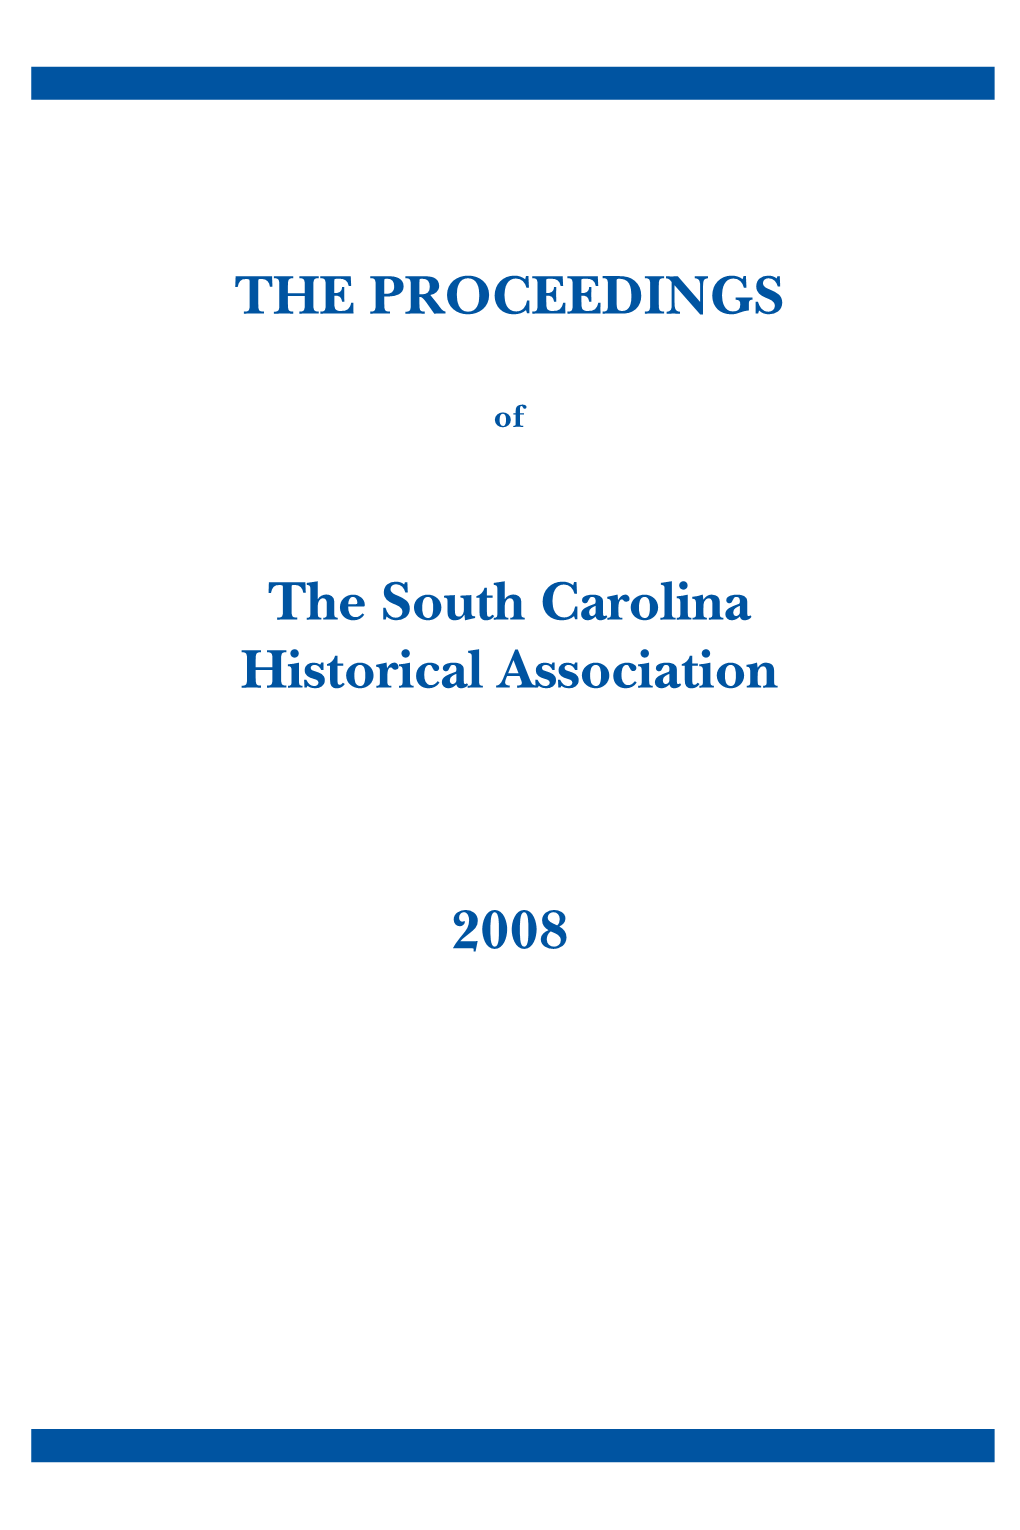 THE PROCEEDINGS the South Carolina Historical Association 2008